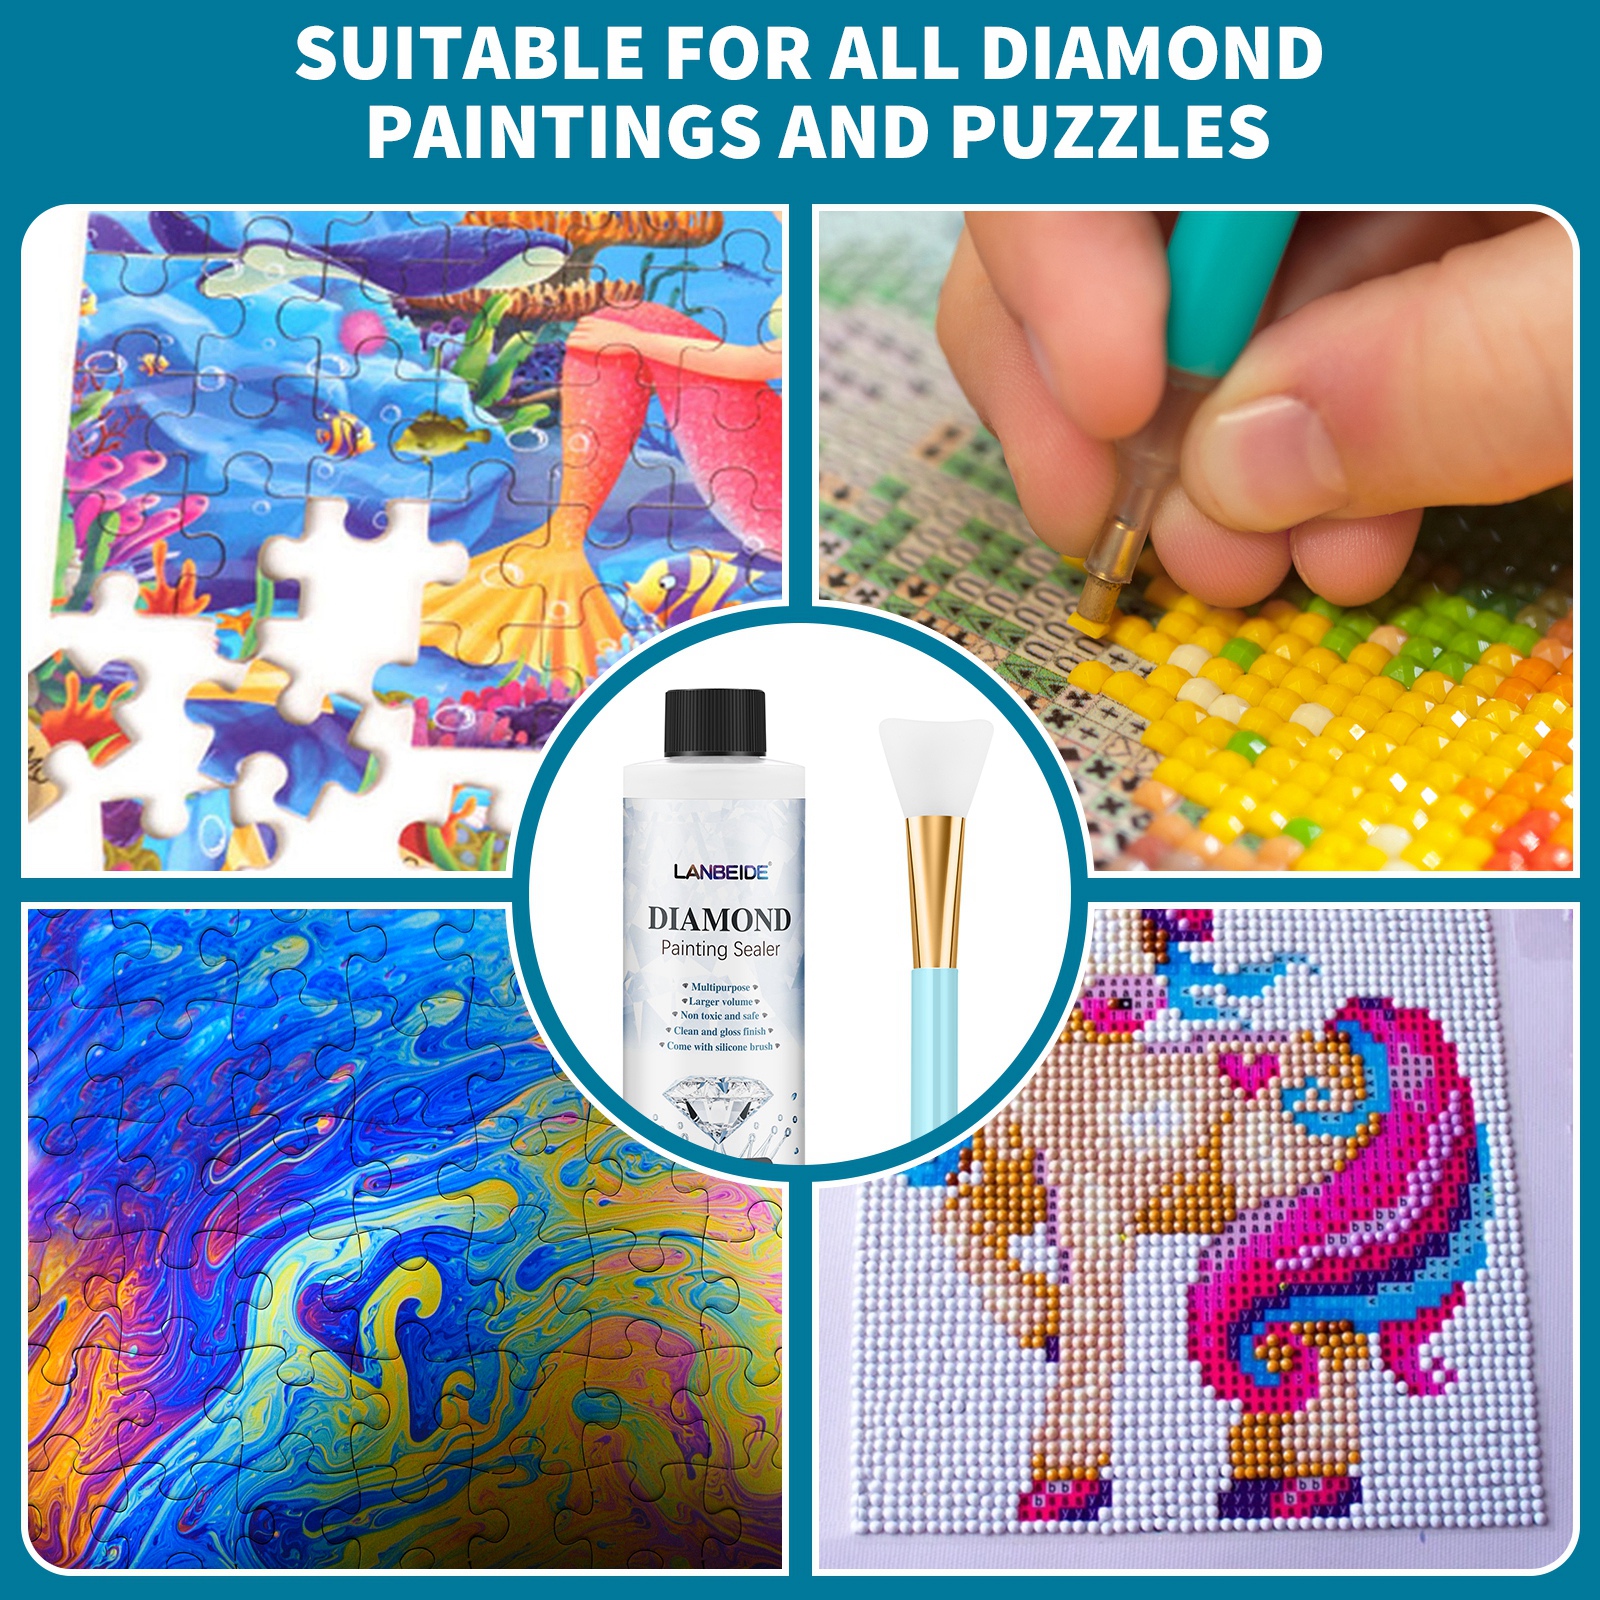 LANBEIDE 200ML Diamond Painting Sealer 5D Art Glue Permanent Hold